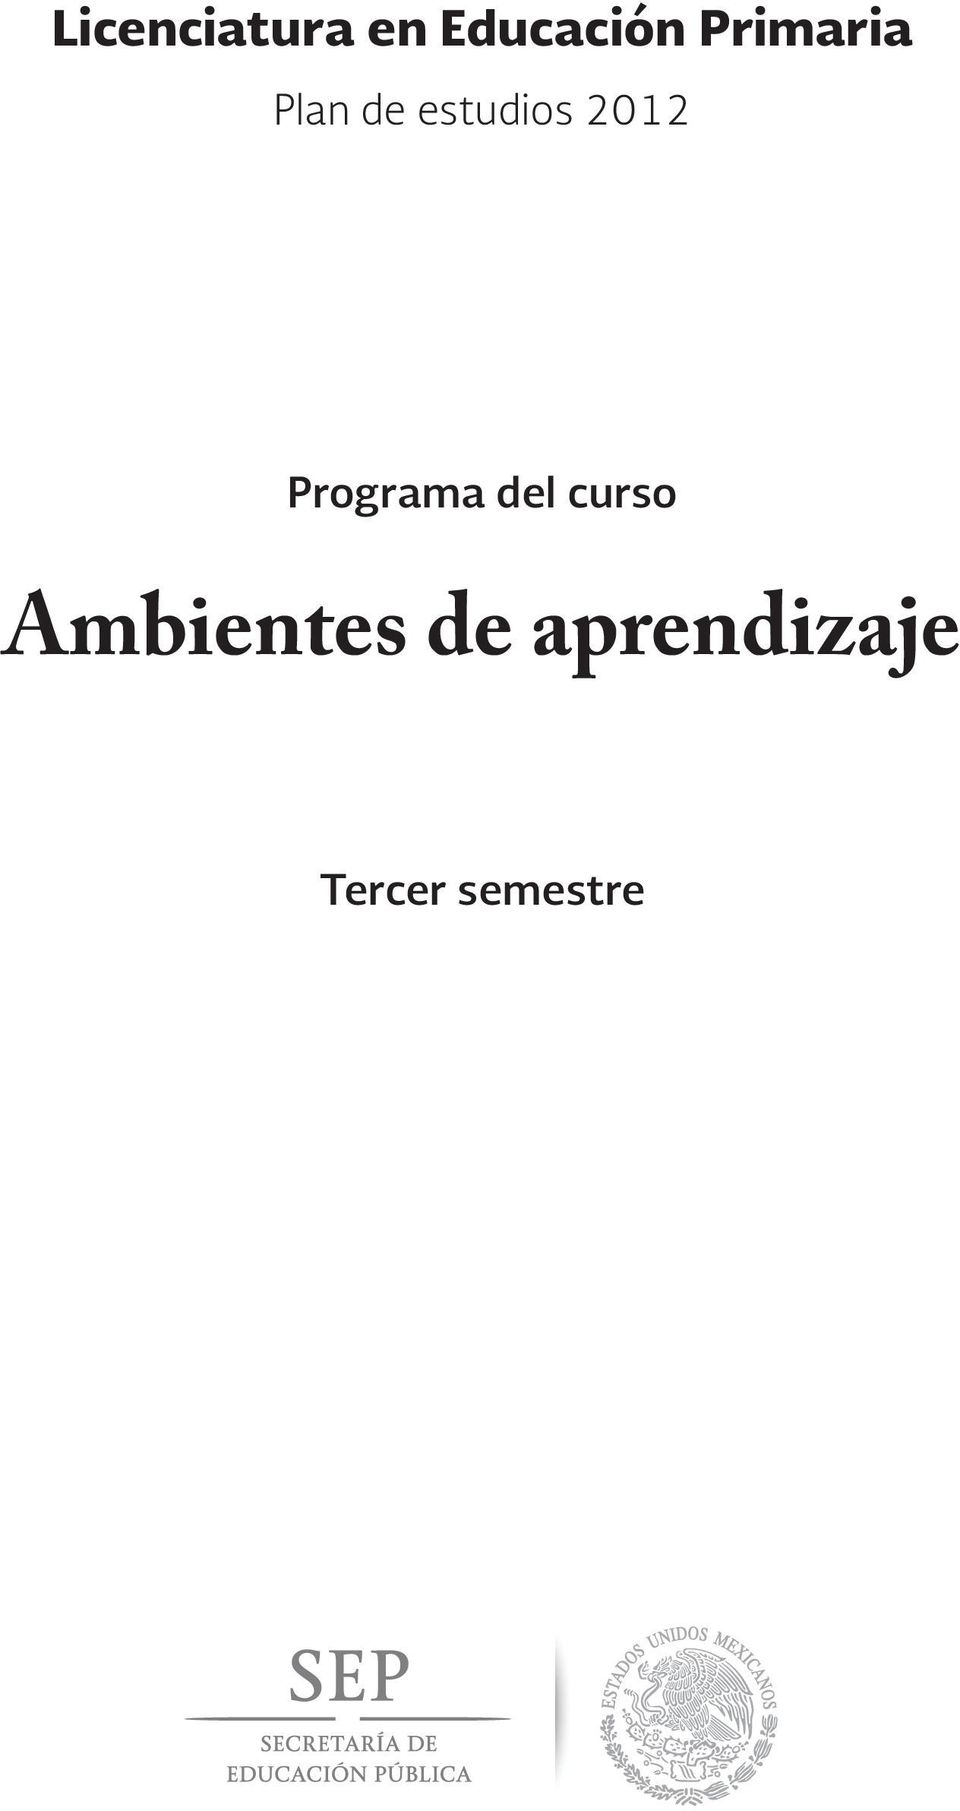 2012 Programa del curso